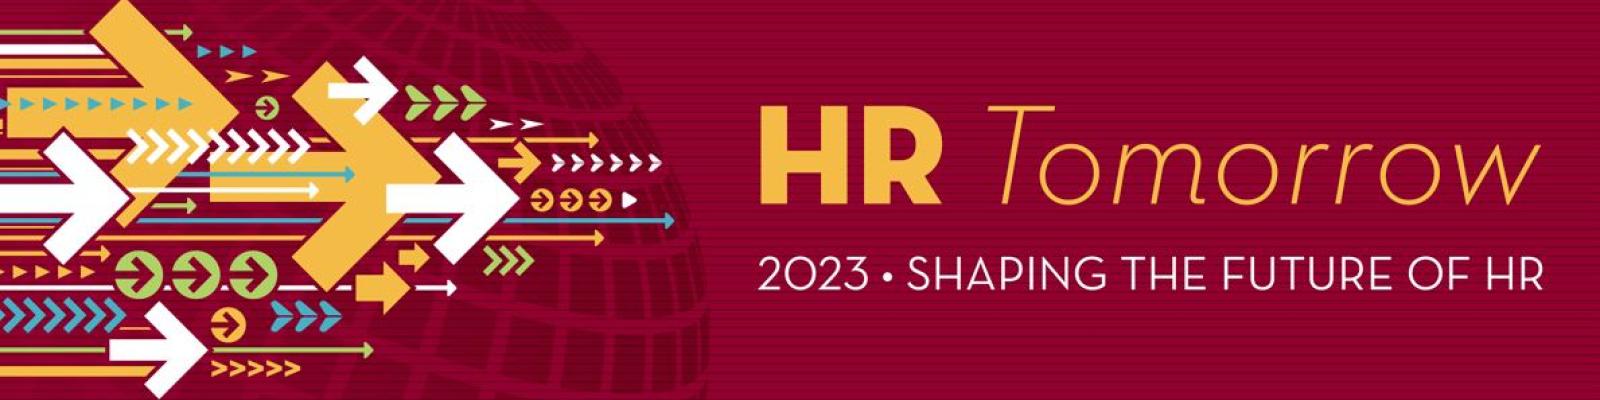 HR Tomorrow 2023 Banner